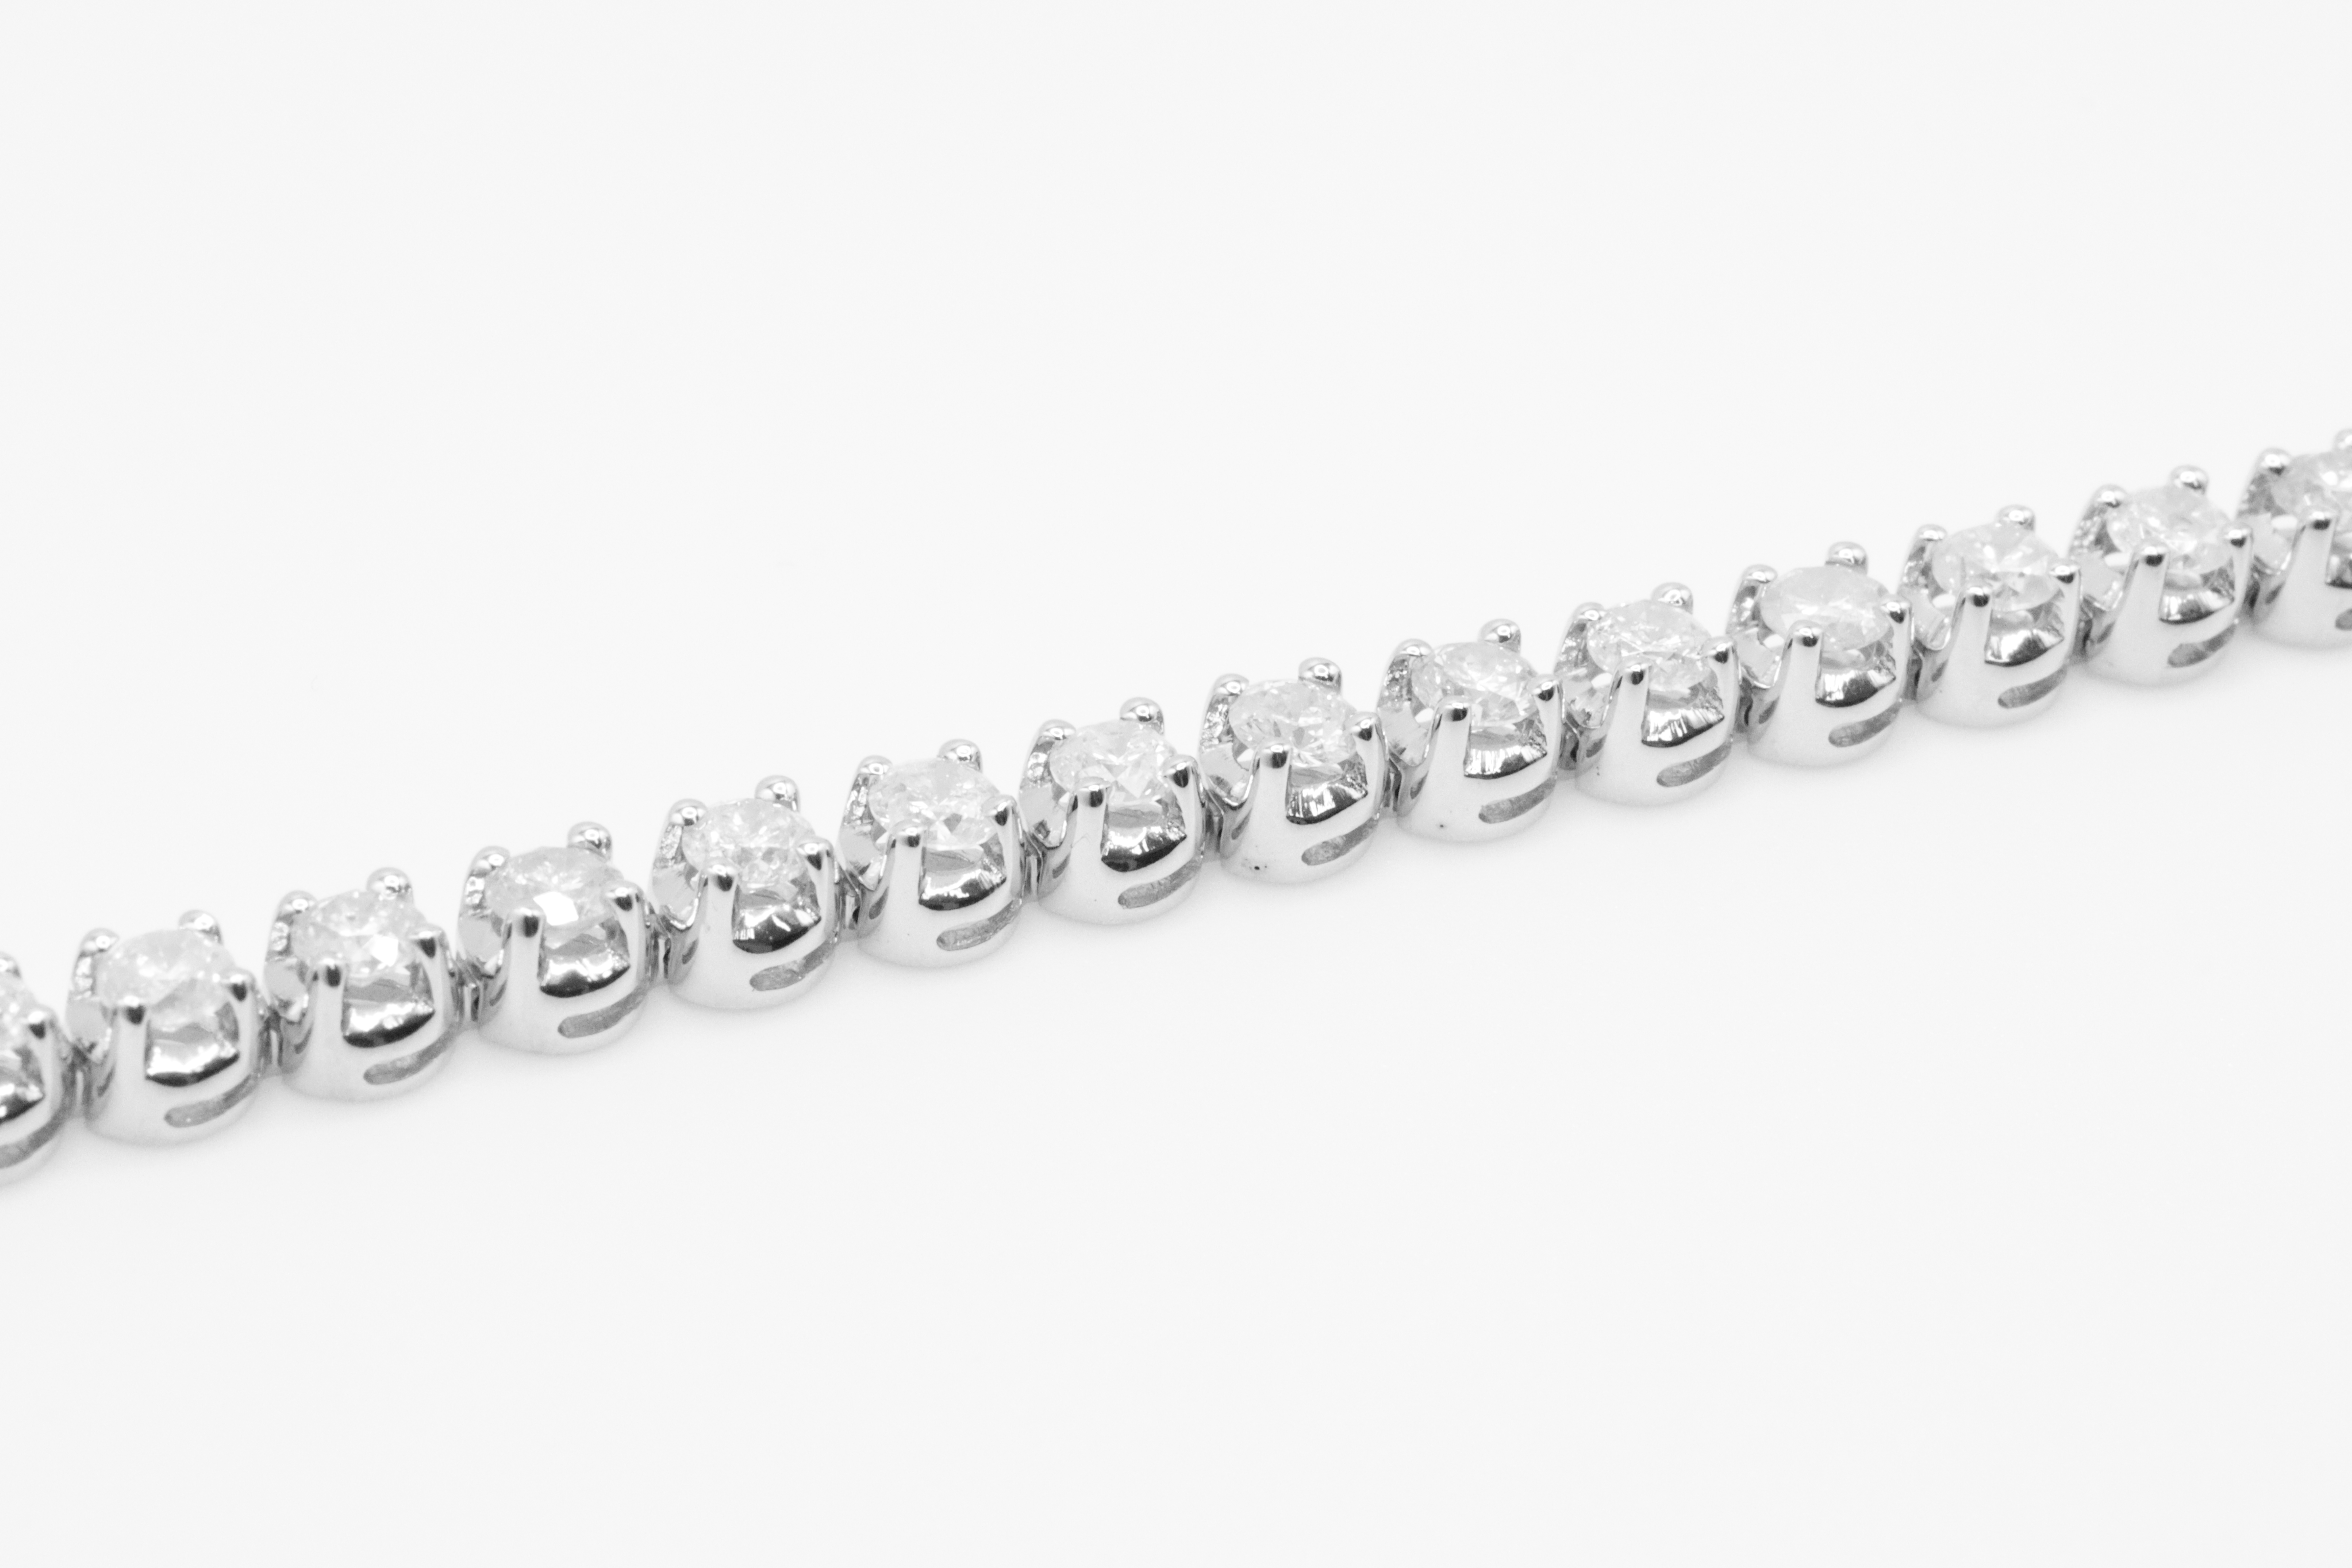 7.0 Carat 18ct White Gold Tennis Bracelet set with Round Brilliant Cut Natural Diamonds - Image 14 of 16